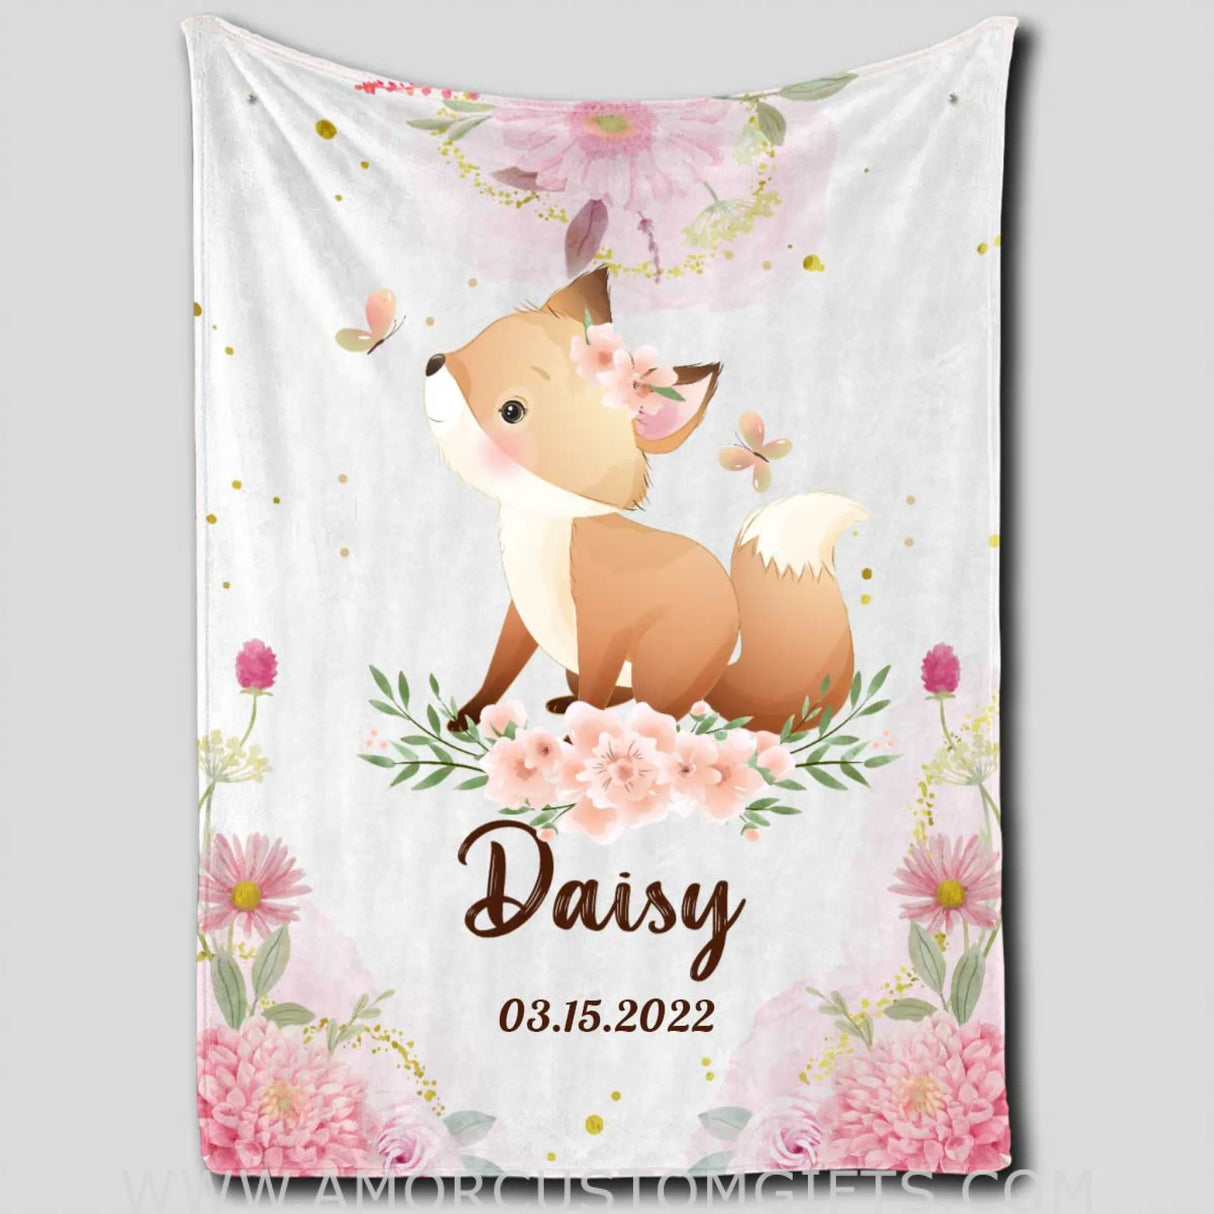 Blankets Customized Baby Blankets, Giraffe Blanket, Horse Blanket, Pig and Bunny Baby Throw Blanket for Boy and Girl Newborn Fleece Blanket